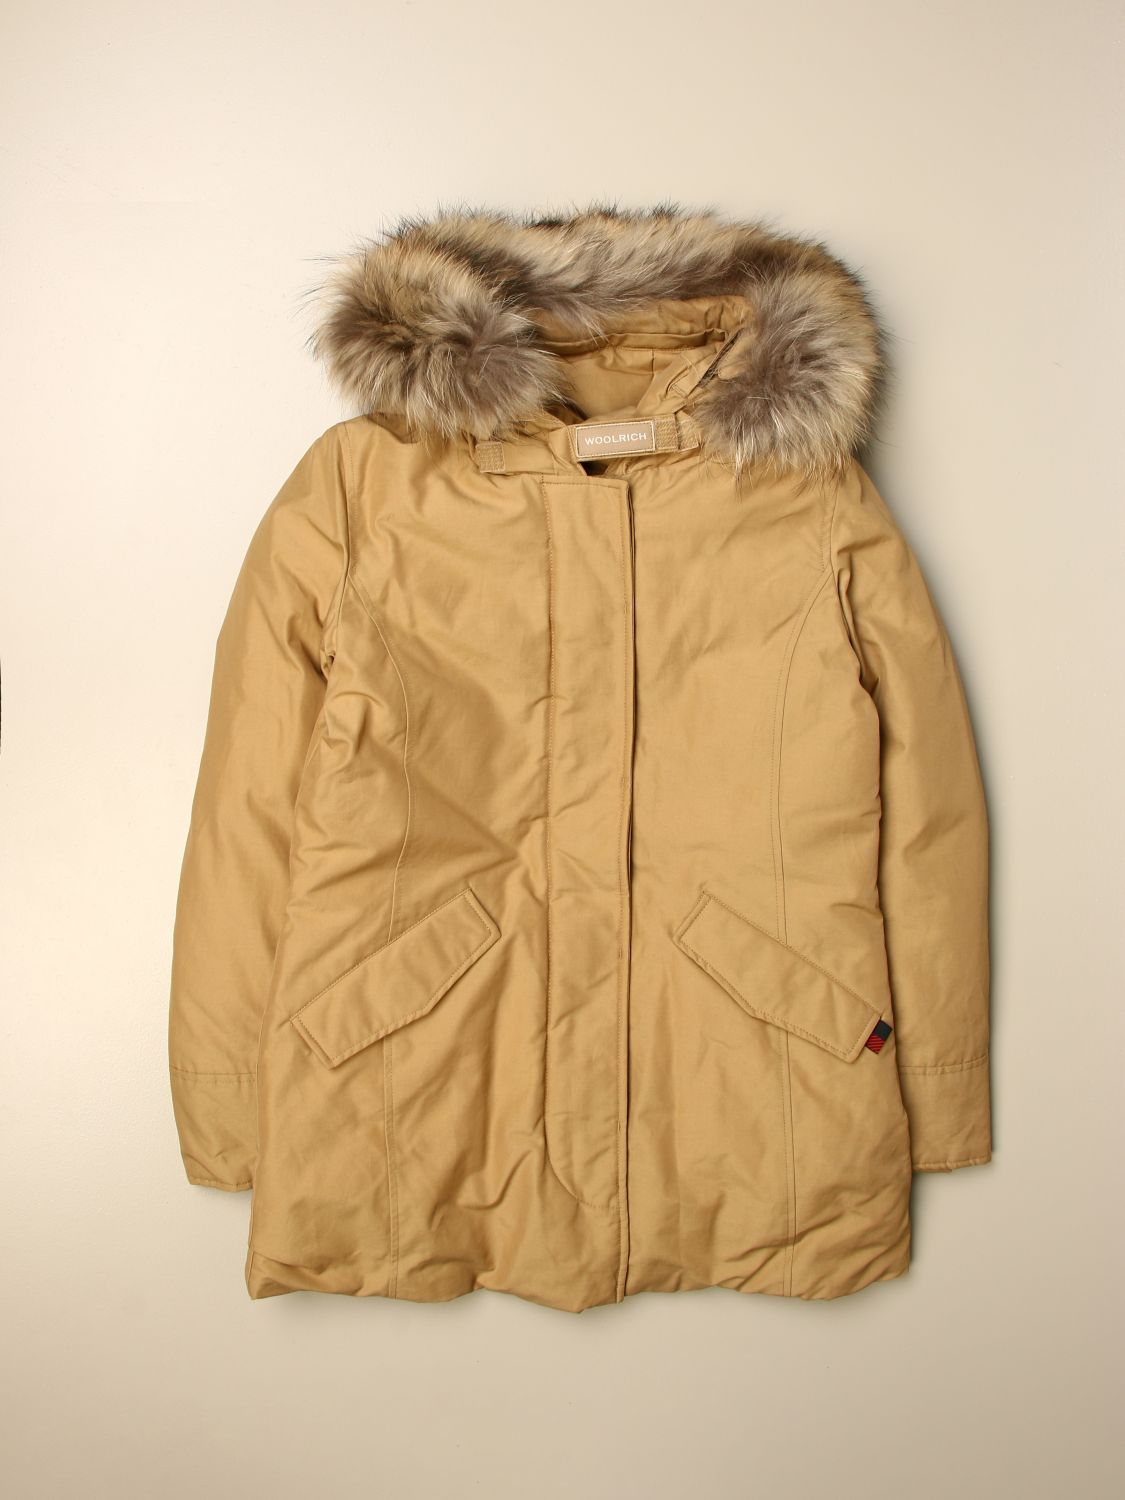 Kudde jungle Vertrek Woolrich Outlet: jacket for girls - Sand | Woolrich jacket WKOU0103FR  UT0641 online on GIGLIO.COM